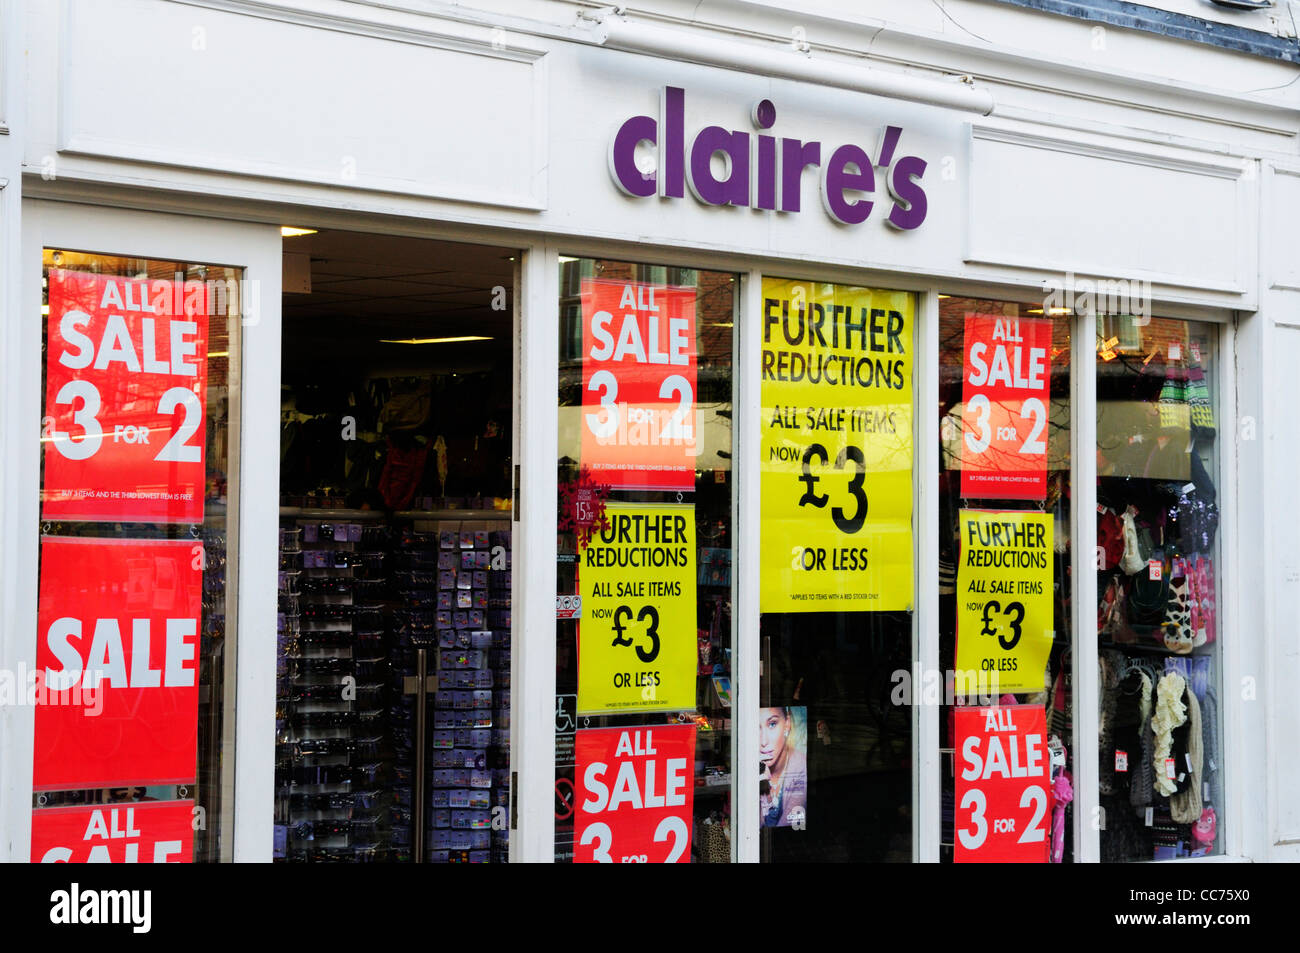 Claire's Accessories Shop with Sale Notices, Cambridge, England, UK Stock Photo